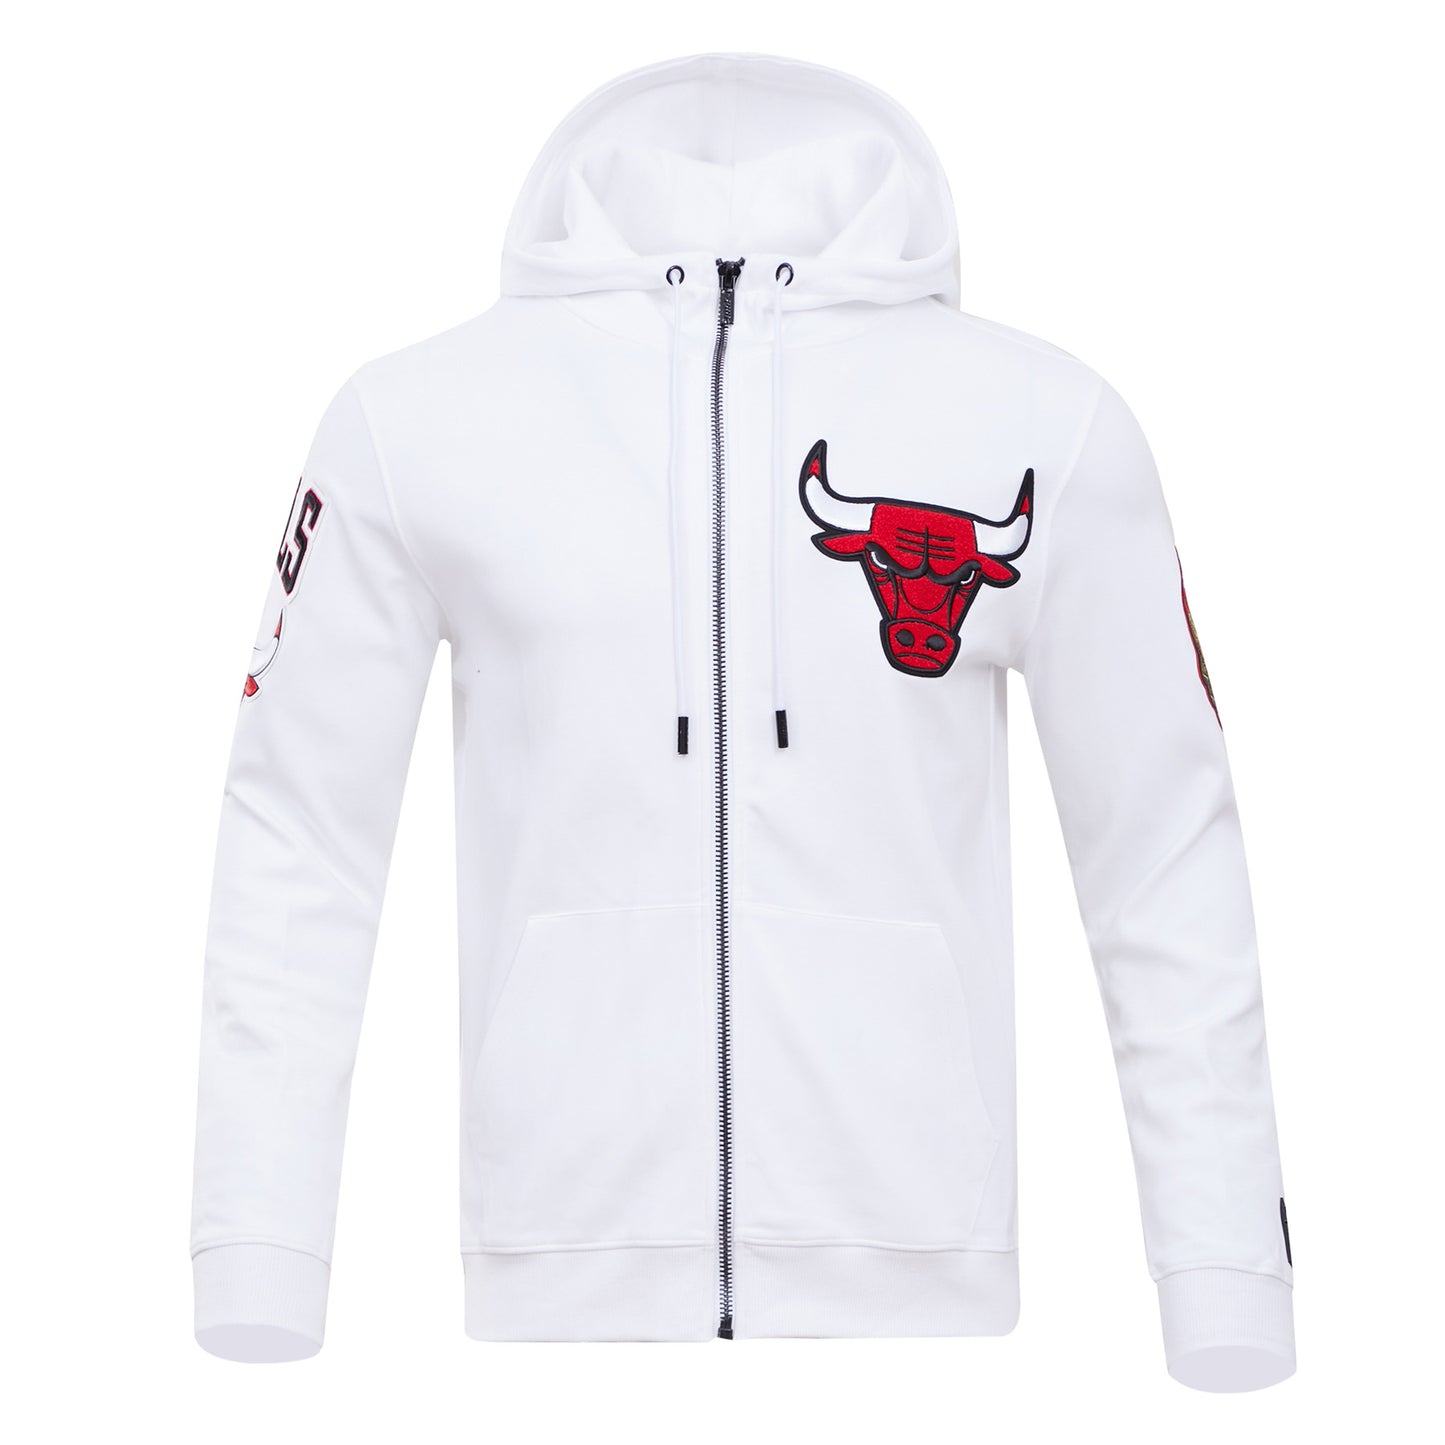 Maker of Jacket NBA Teams Jackets Chicago Bulls Pro Standard Tan Varsity